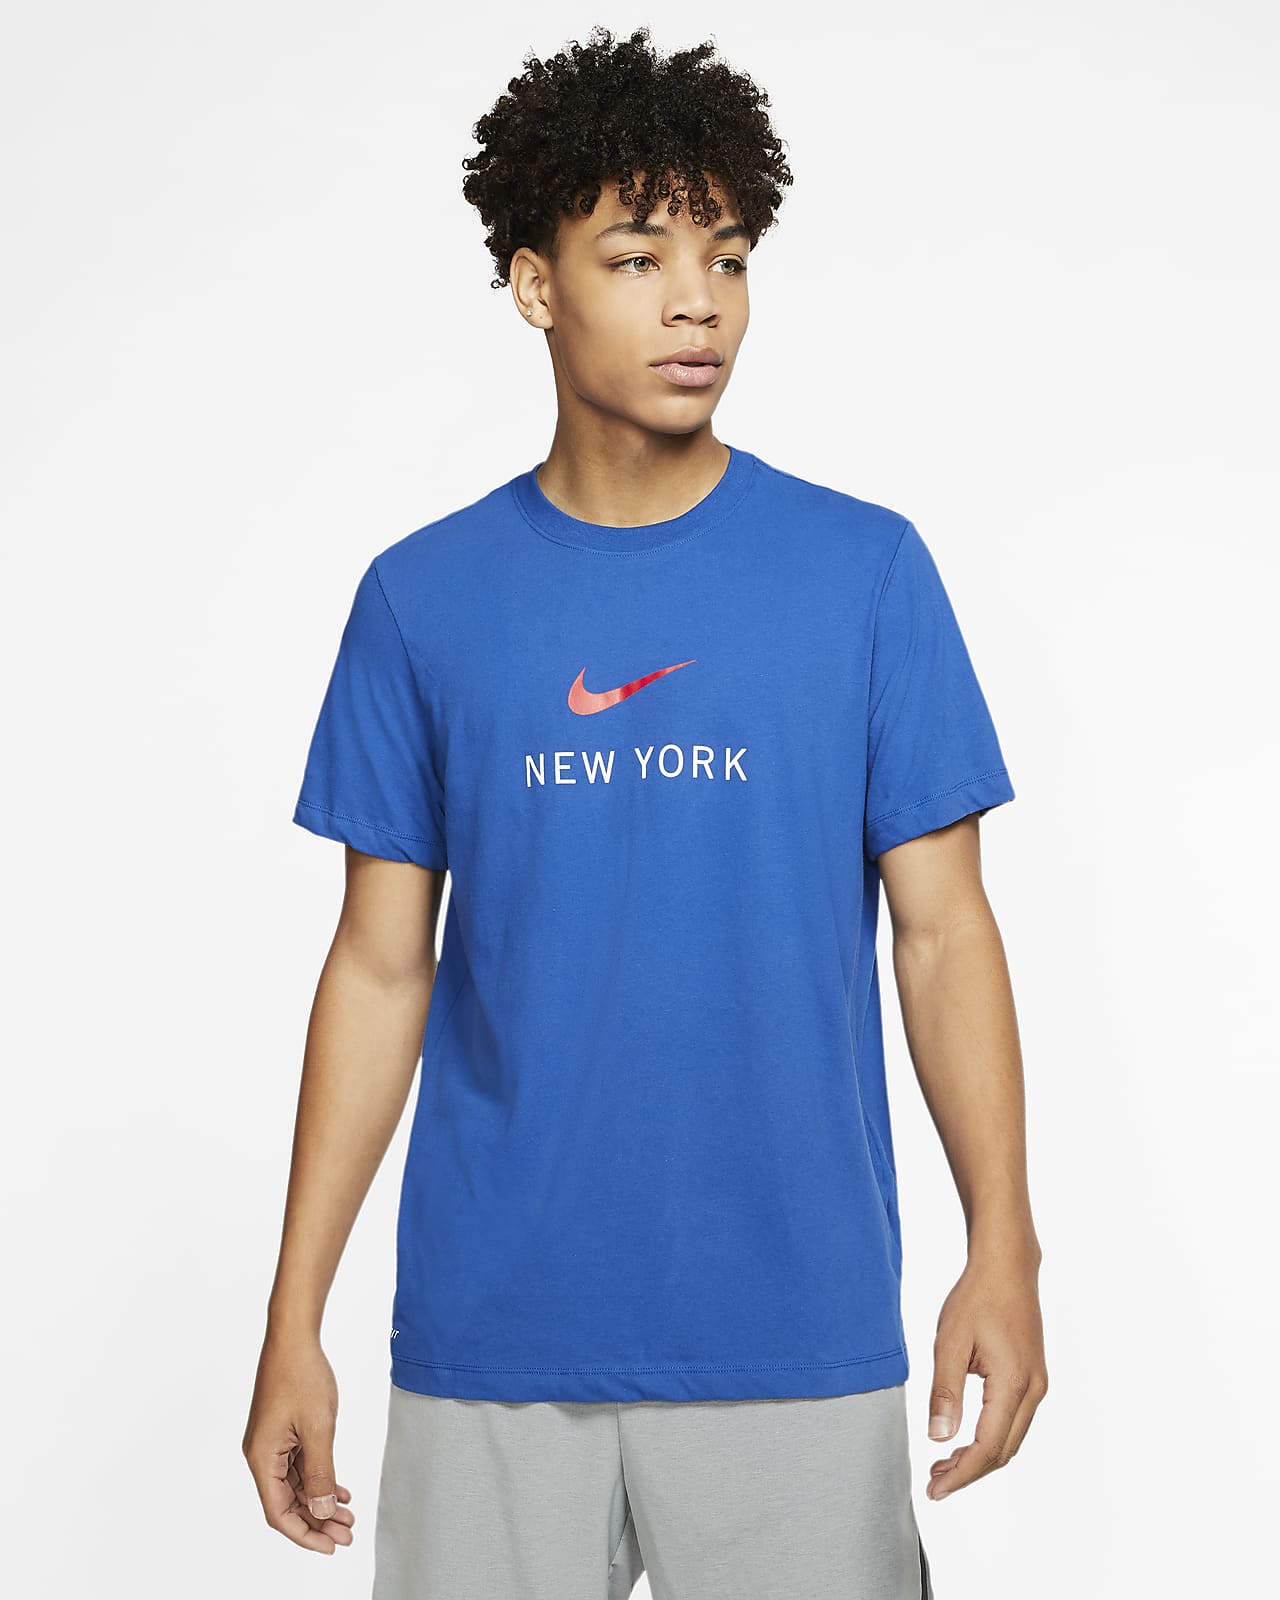 Download Nike Dri-FIT New York Men's Training T-Shirt. Nike.com